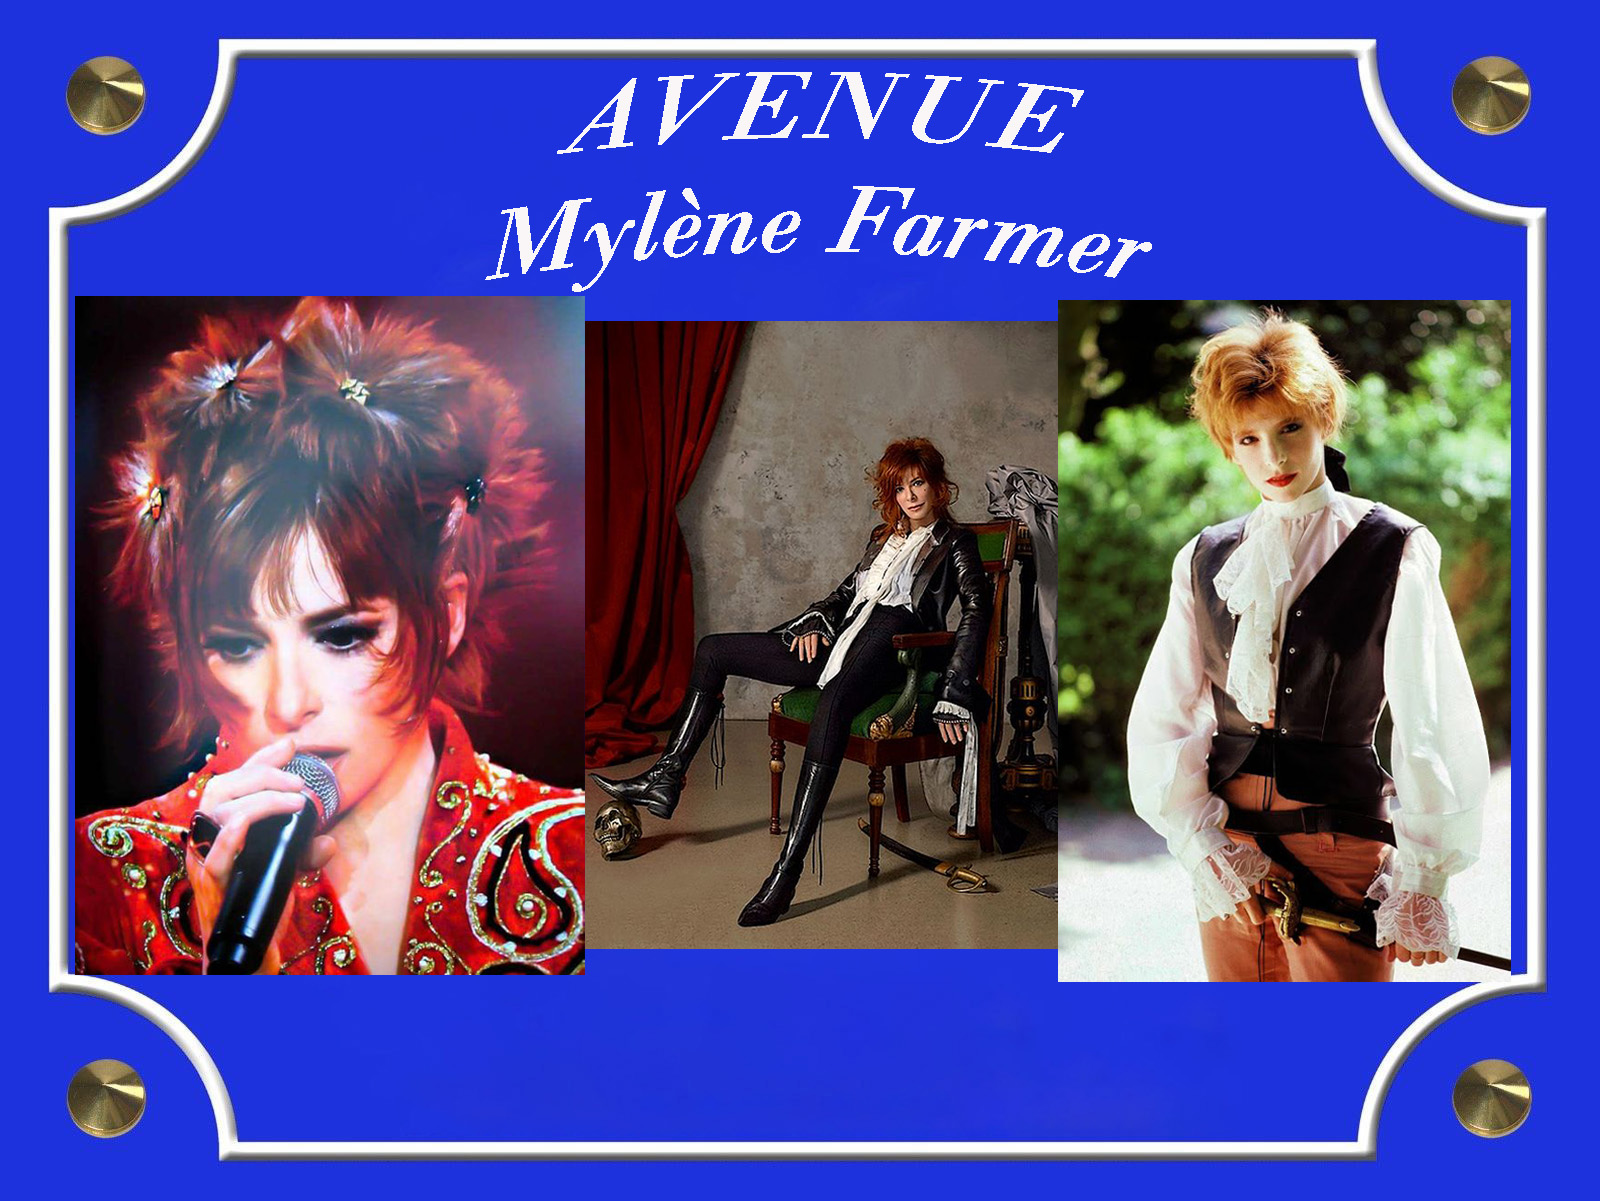 Mylène farmer